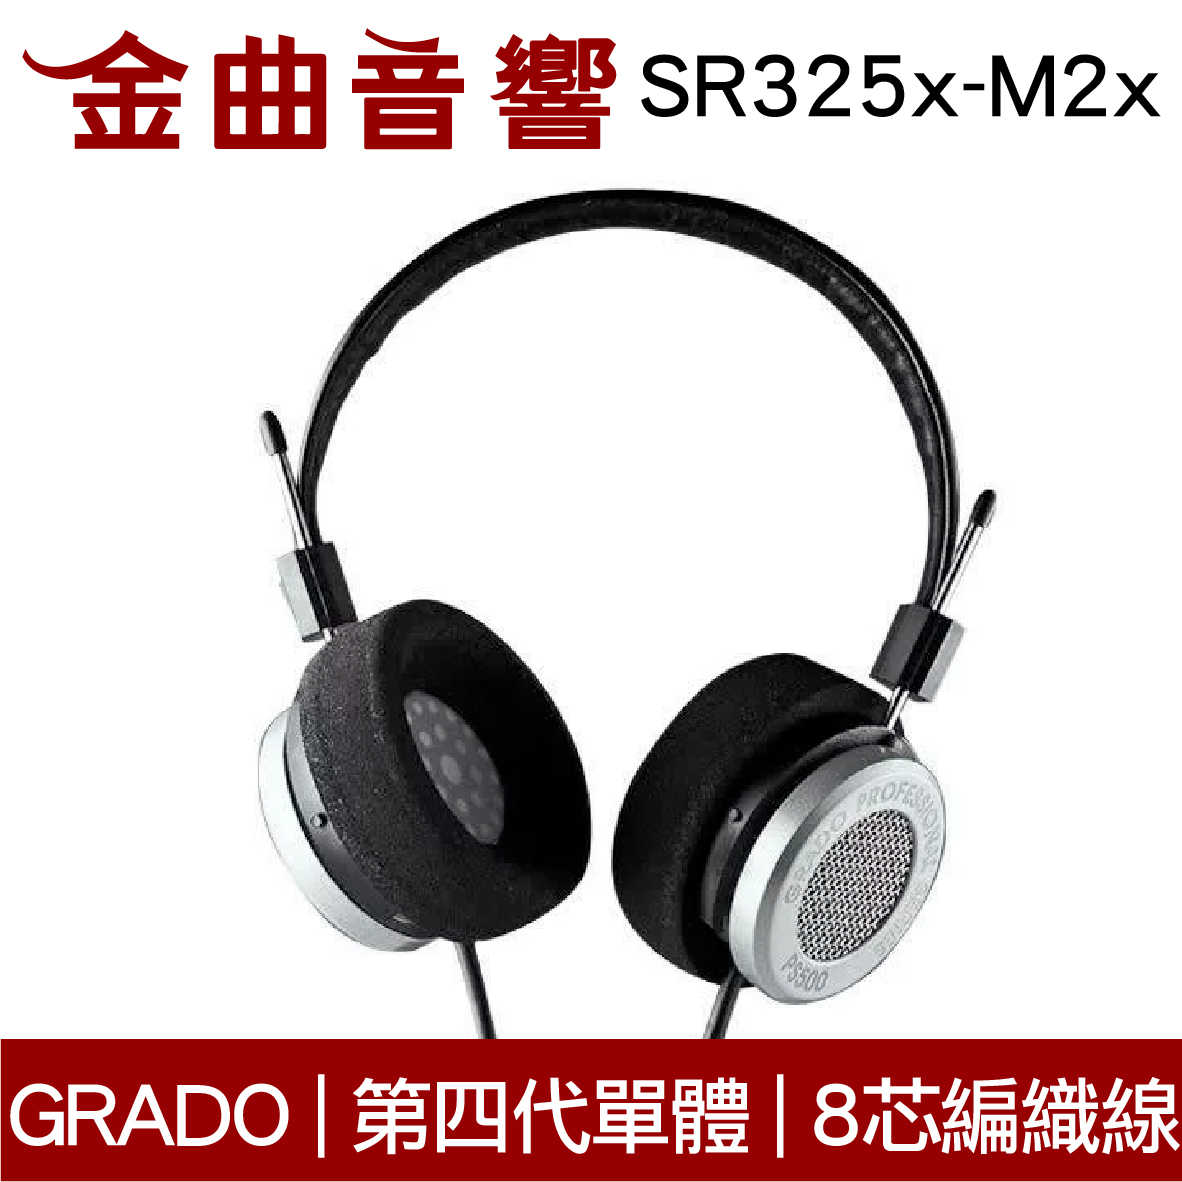 GRADO SR325x-M2x 改款 第四代新單體 超級退火銅 8芯線材 開放式 耳罩式耳機 | 金曲音響